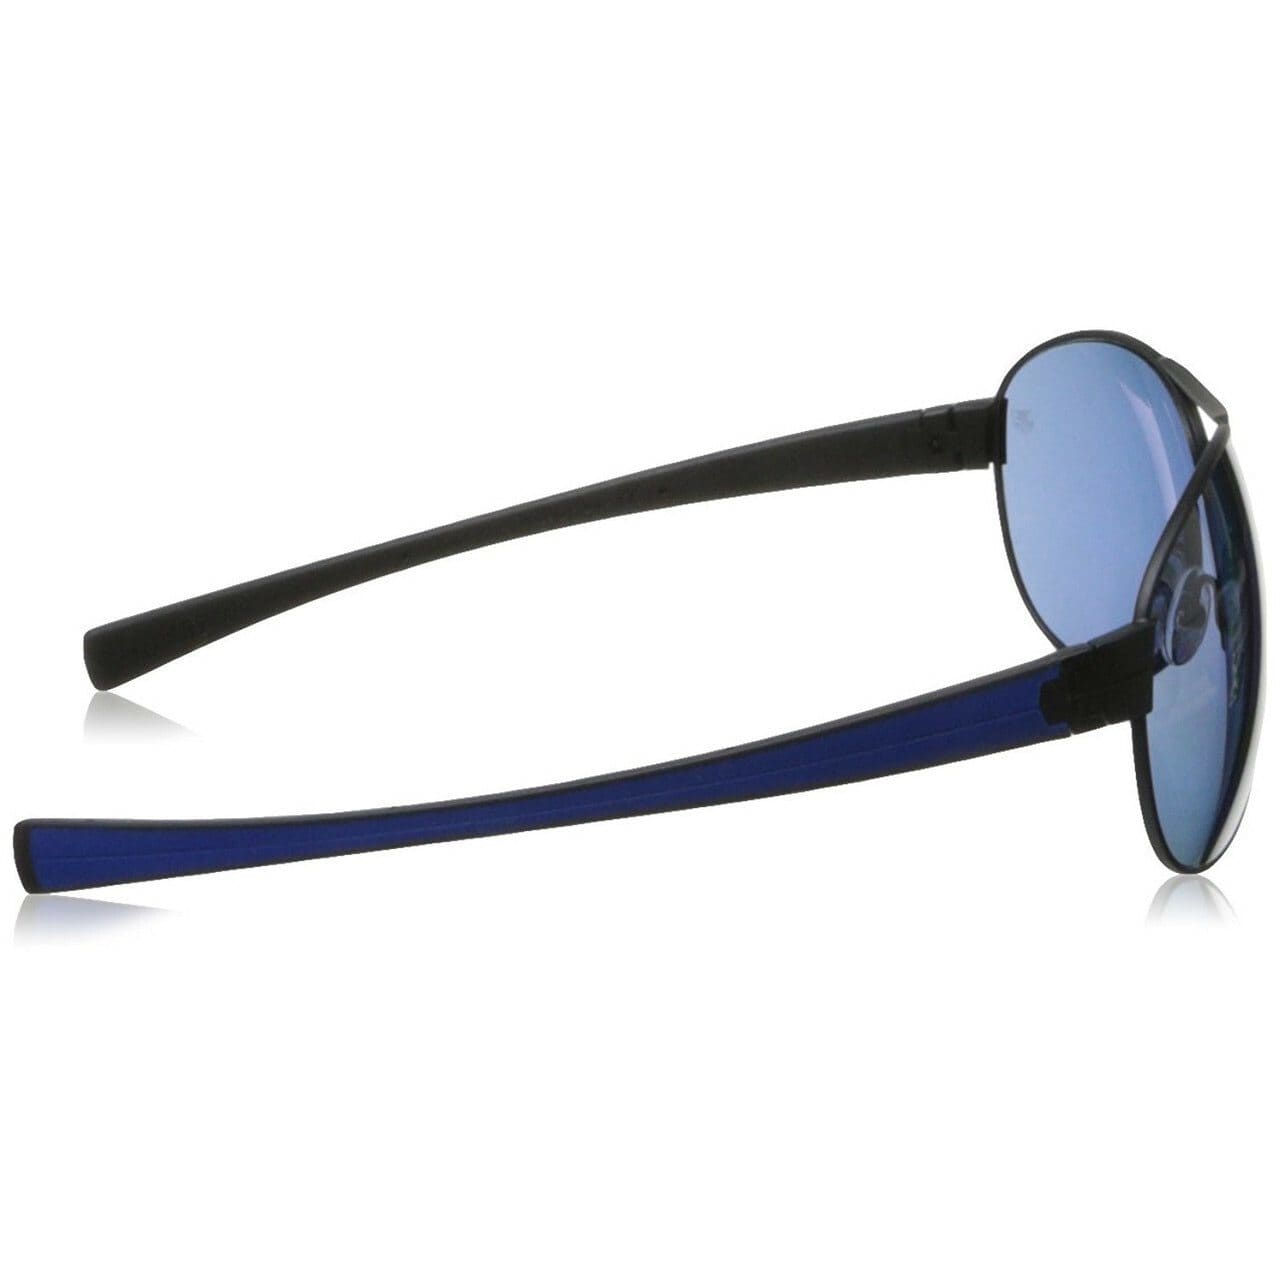 TAG Heuer LRS 0253 404 Blue / Black 62mm Polarized Blue Lens Aviator Sunglasses 660253404621603